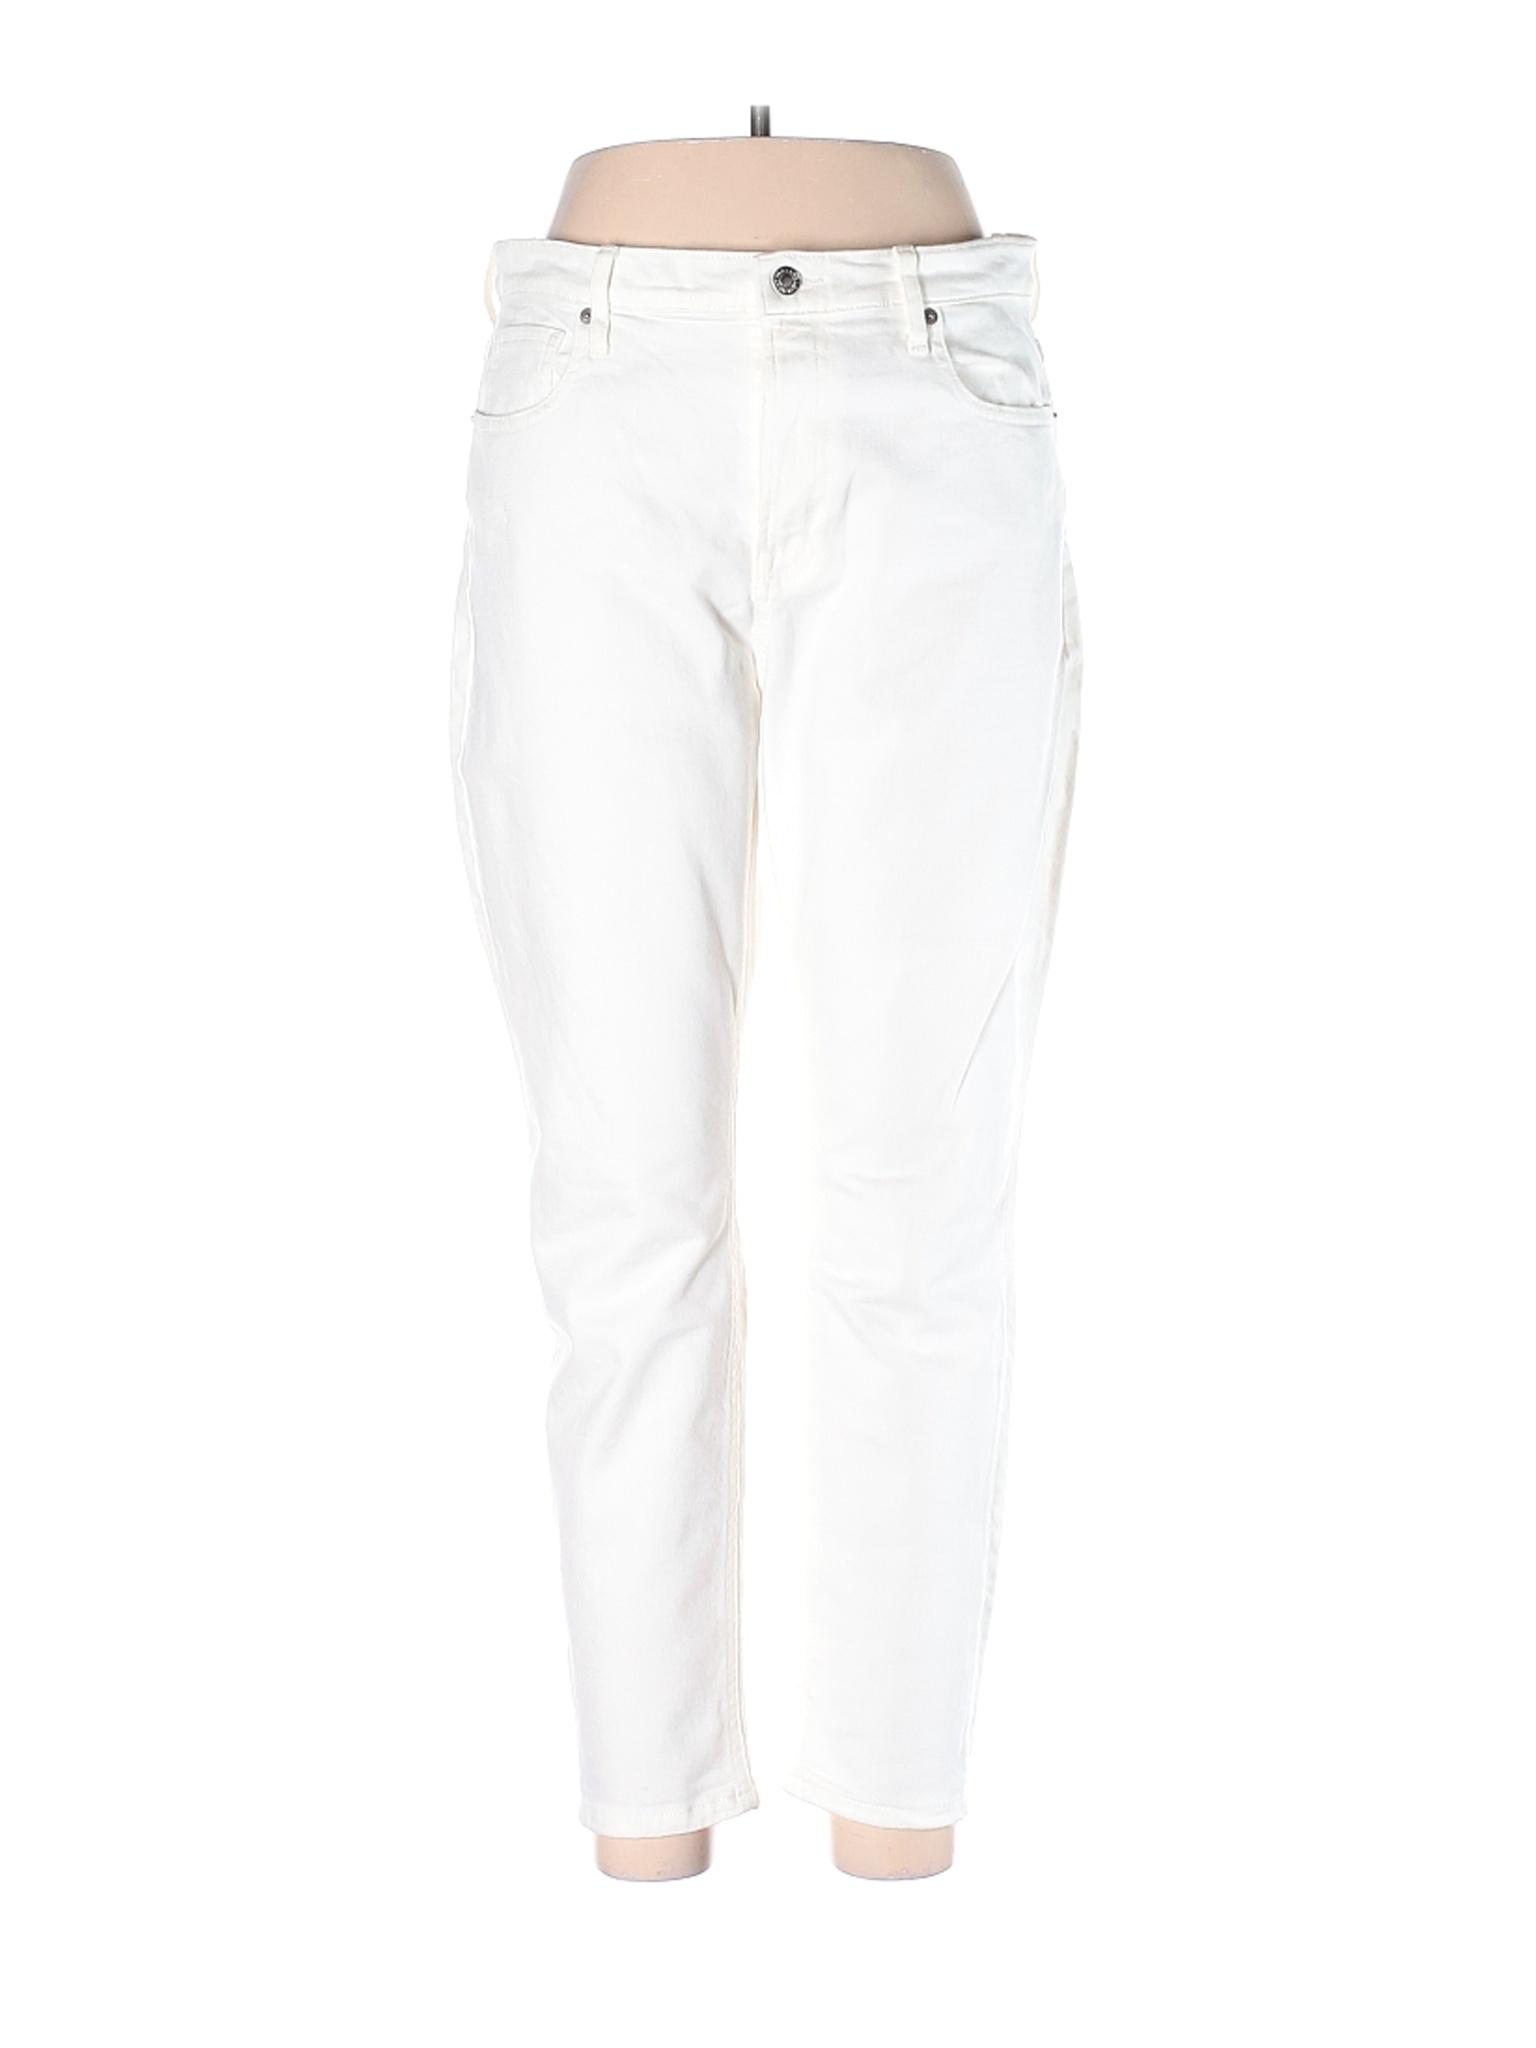 Everlane Women White Jeans 32W | eBay